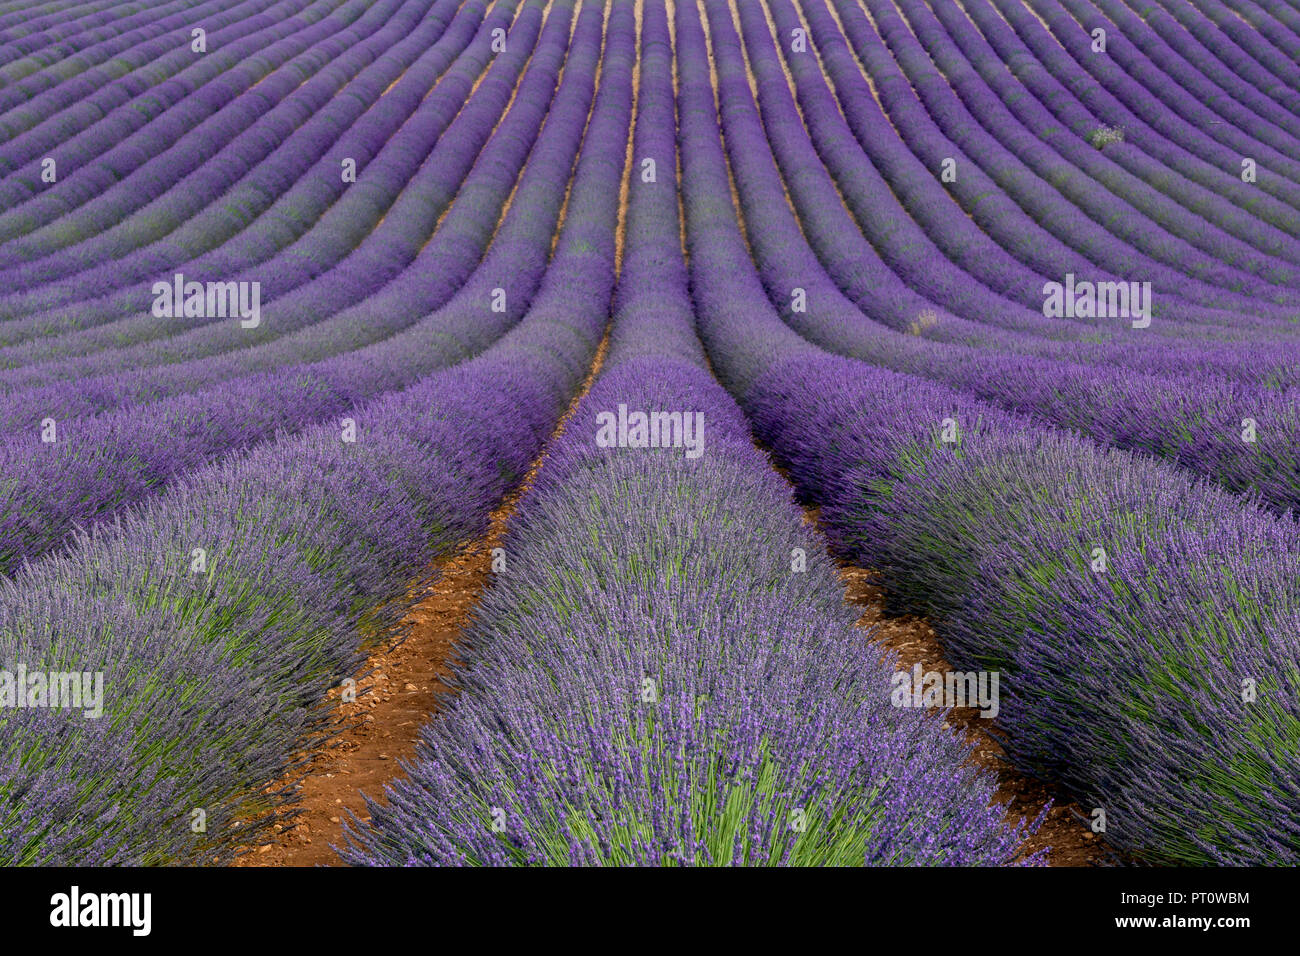 France, Alpes-de-Haute-Provence, Valensole, lavender field Stock Photo